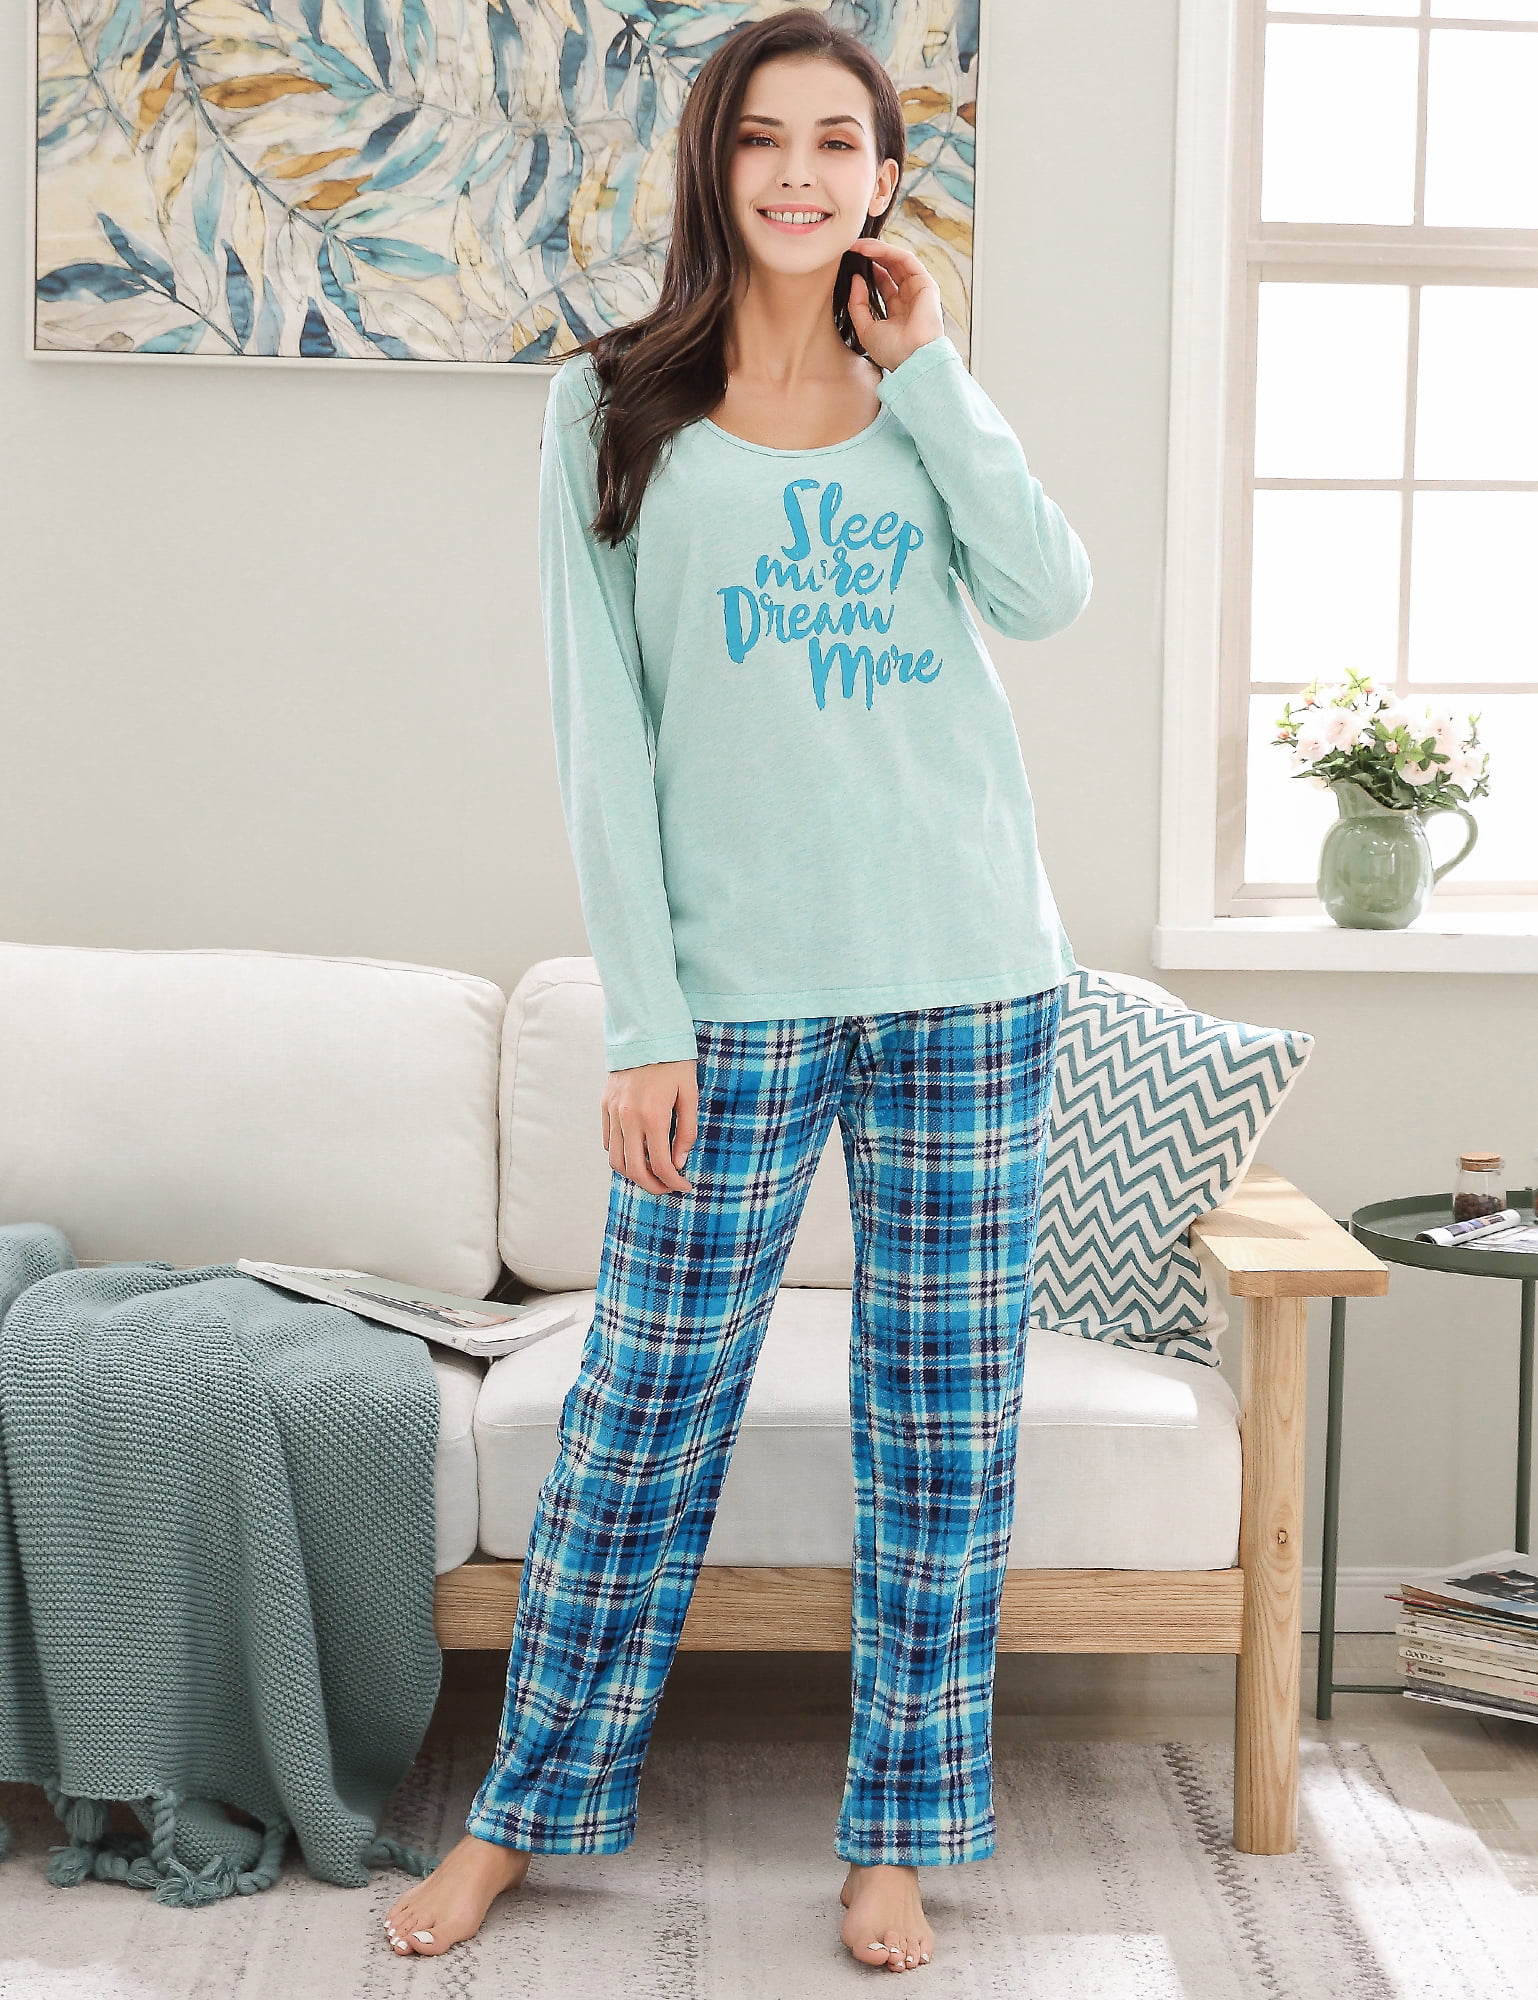 Winter Thick 2 Women Sleep Piece Pants Clothes Tops Set Wear Warm Home  Pyjamas Female Flannel Sleepwear Pijamas Pajamas, Beyondshoping